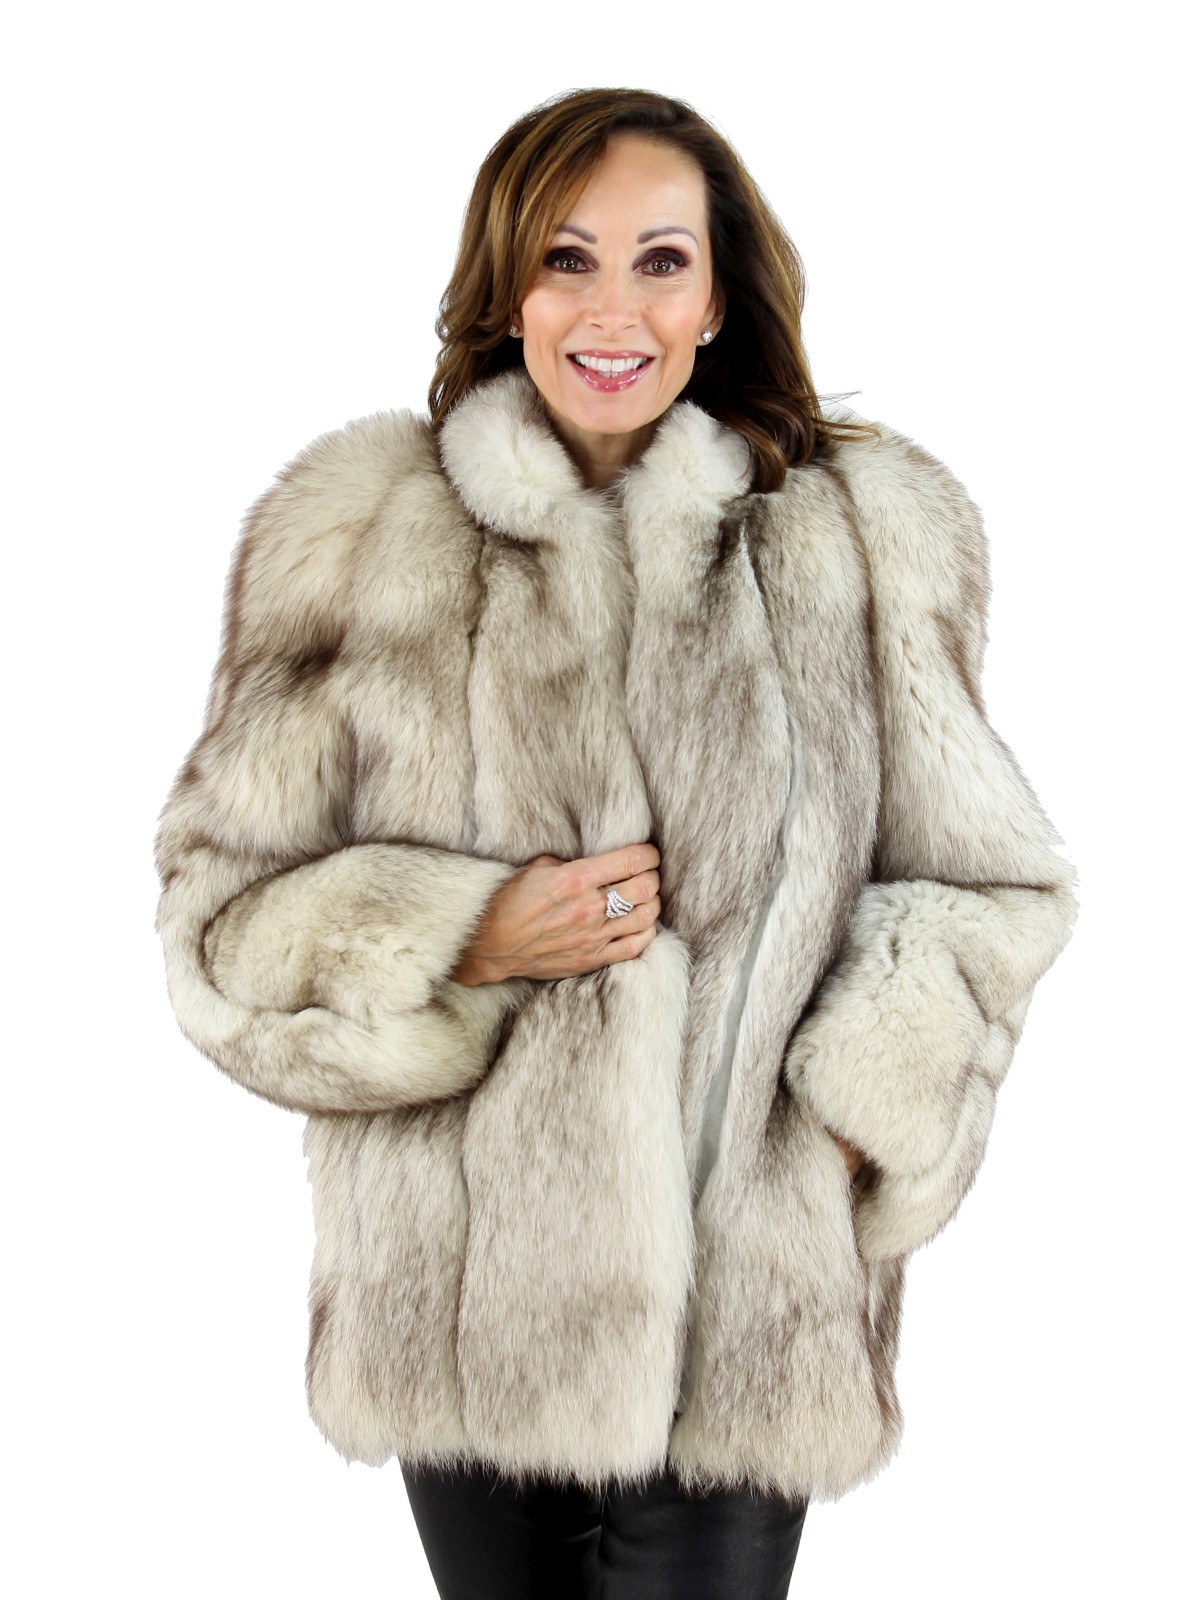 Cord Cut Blue Fox Fur Jacket - Women's Fur Jacket - Medium| Estate Furs